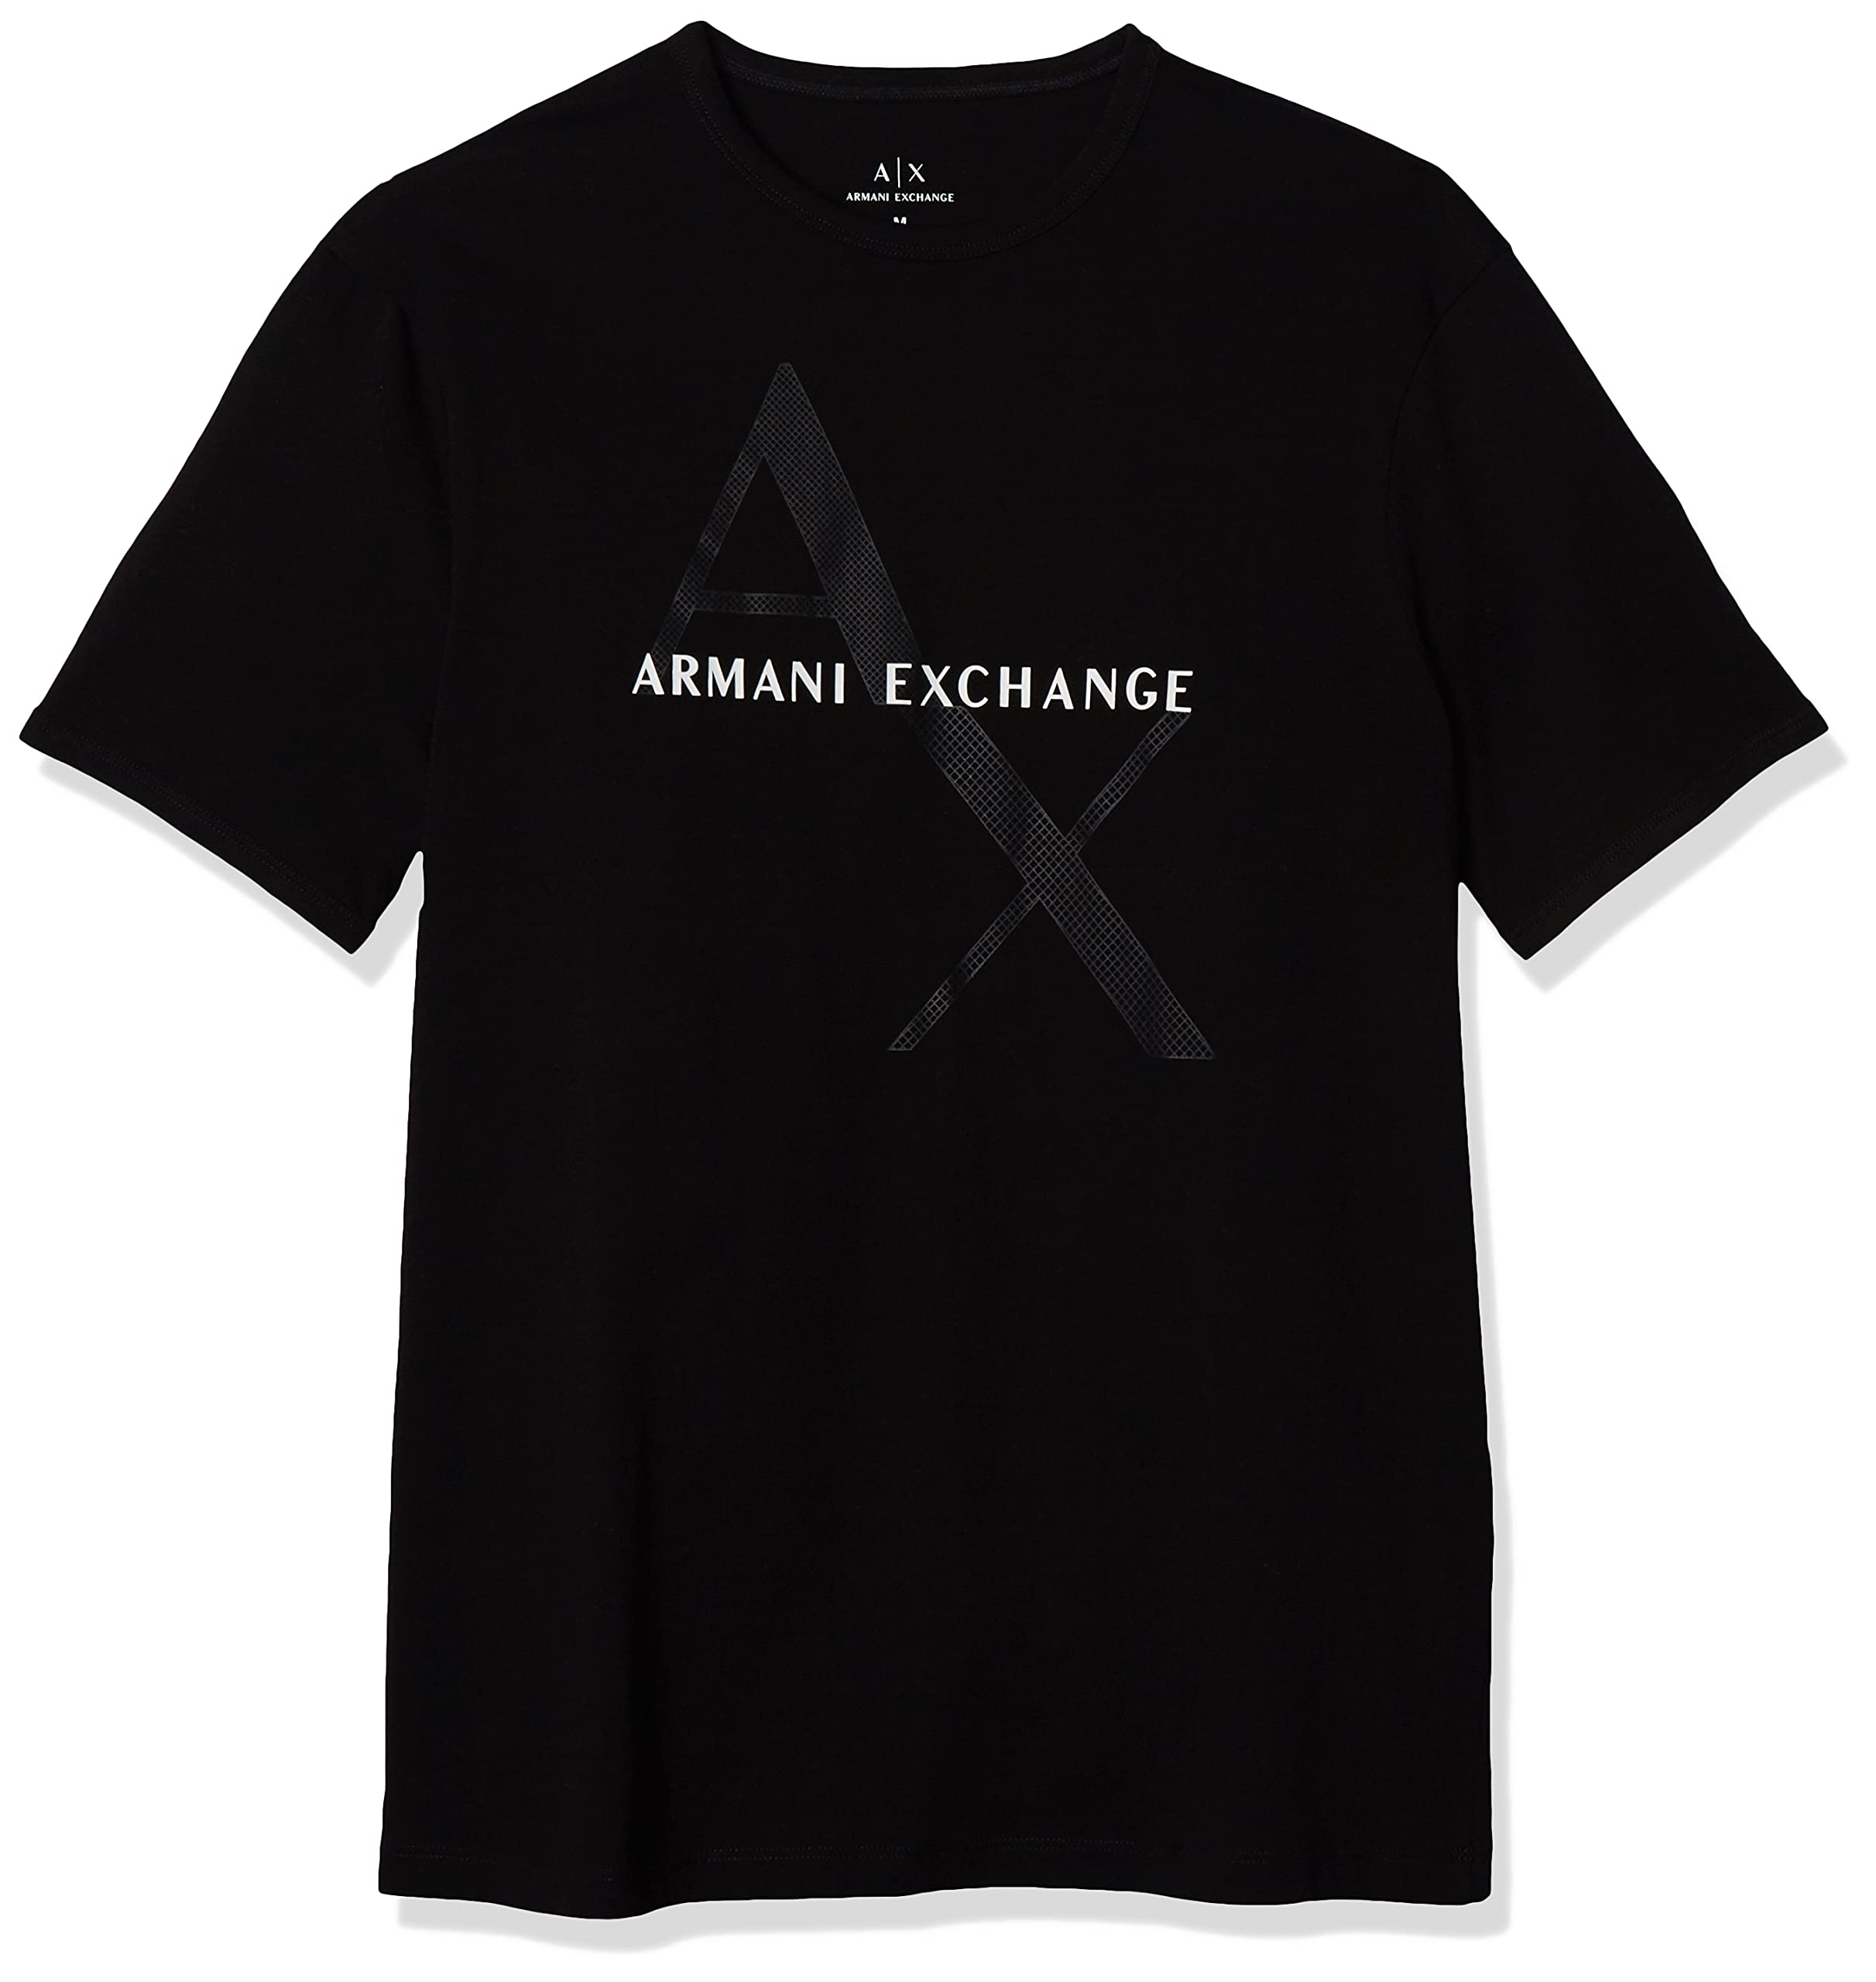 Introducir 46+ imagen armani exchange logo tee